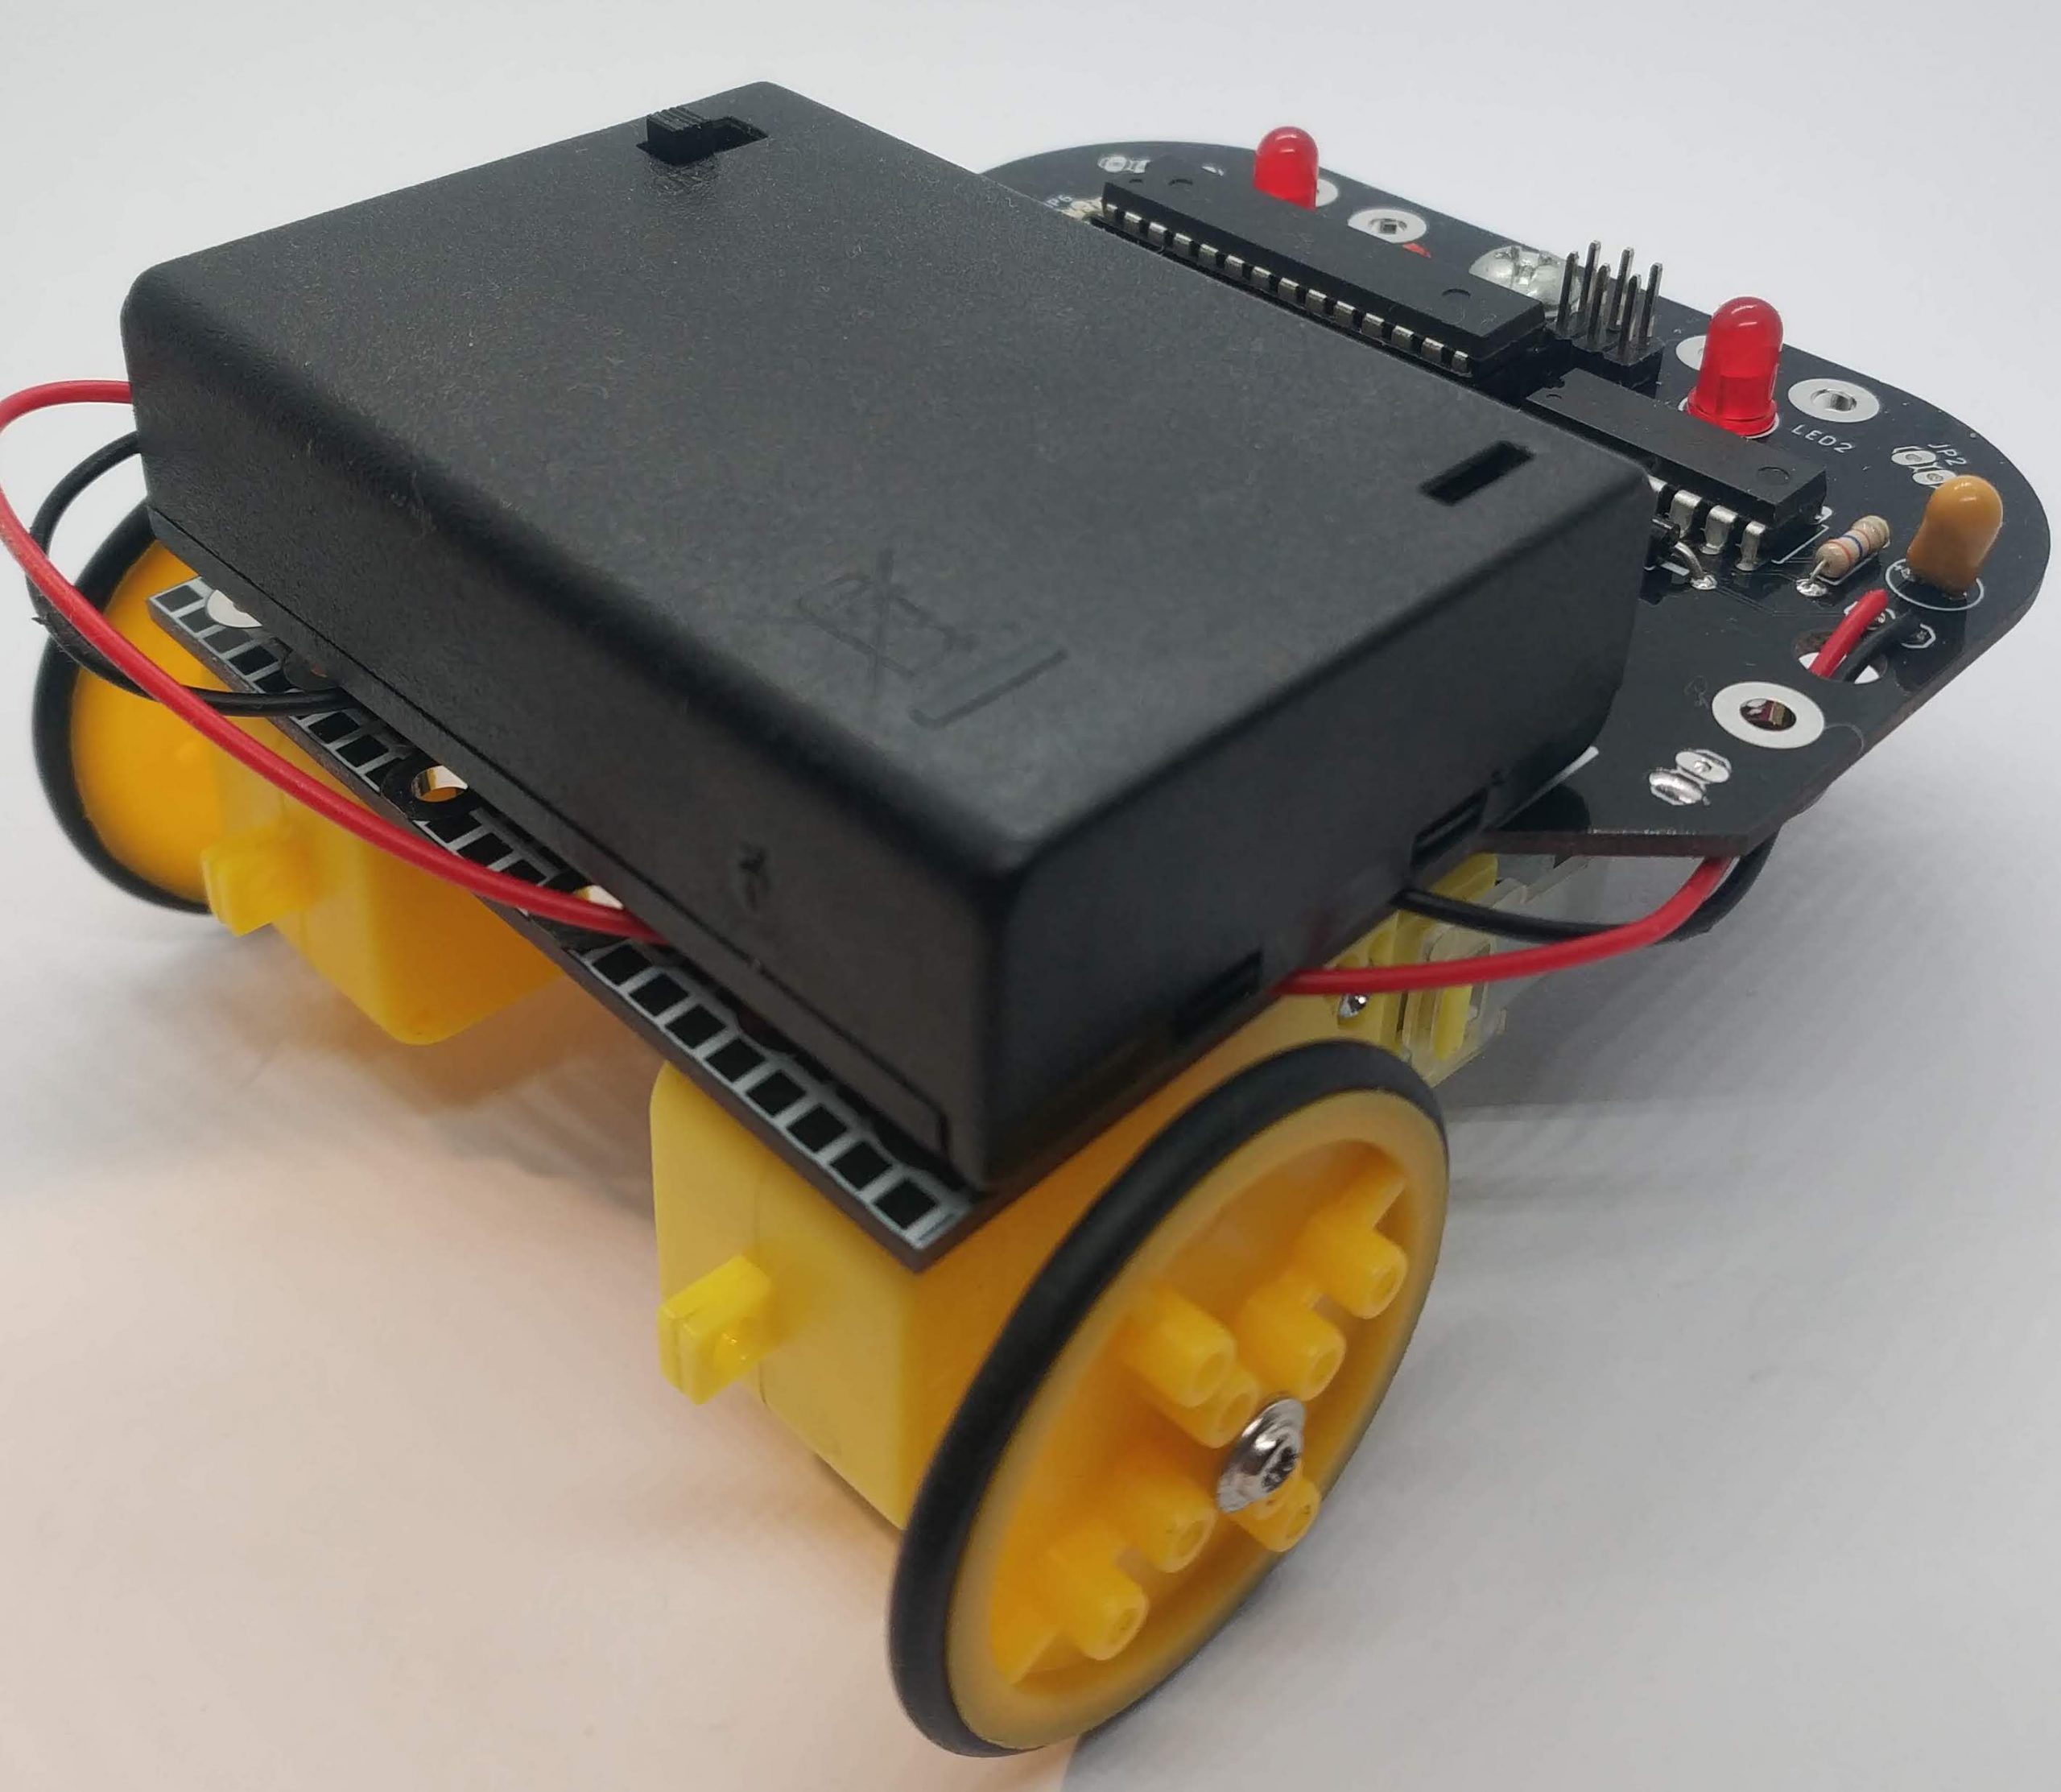 PCB Rover RobotMain